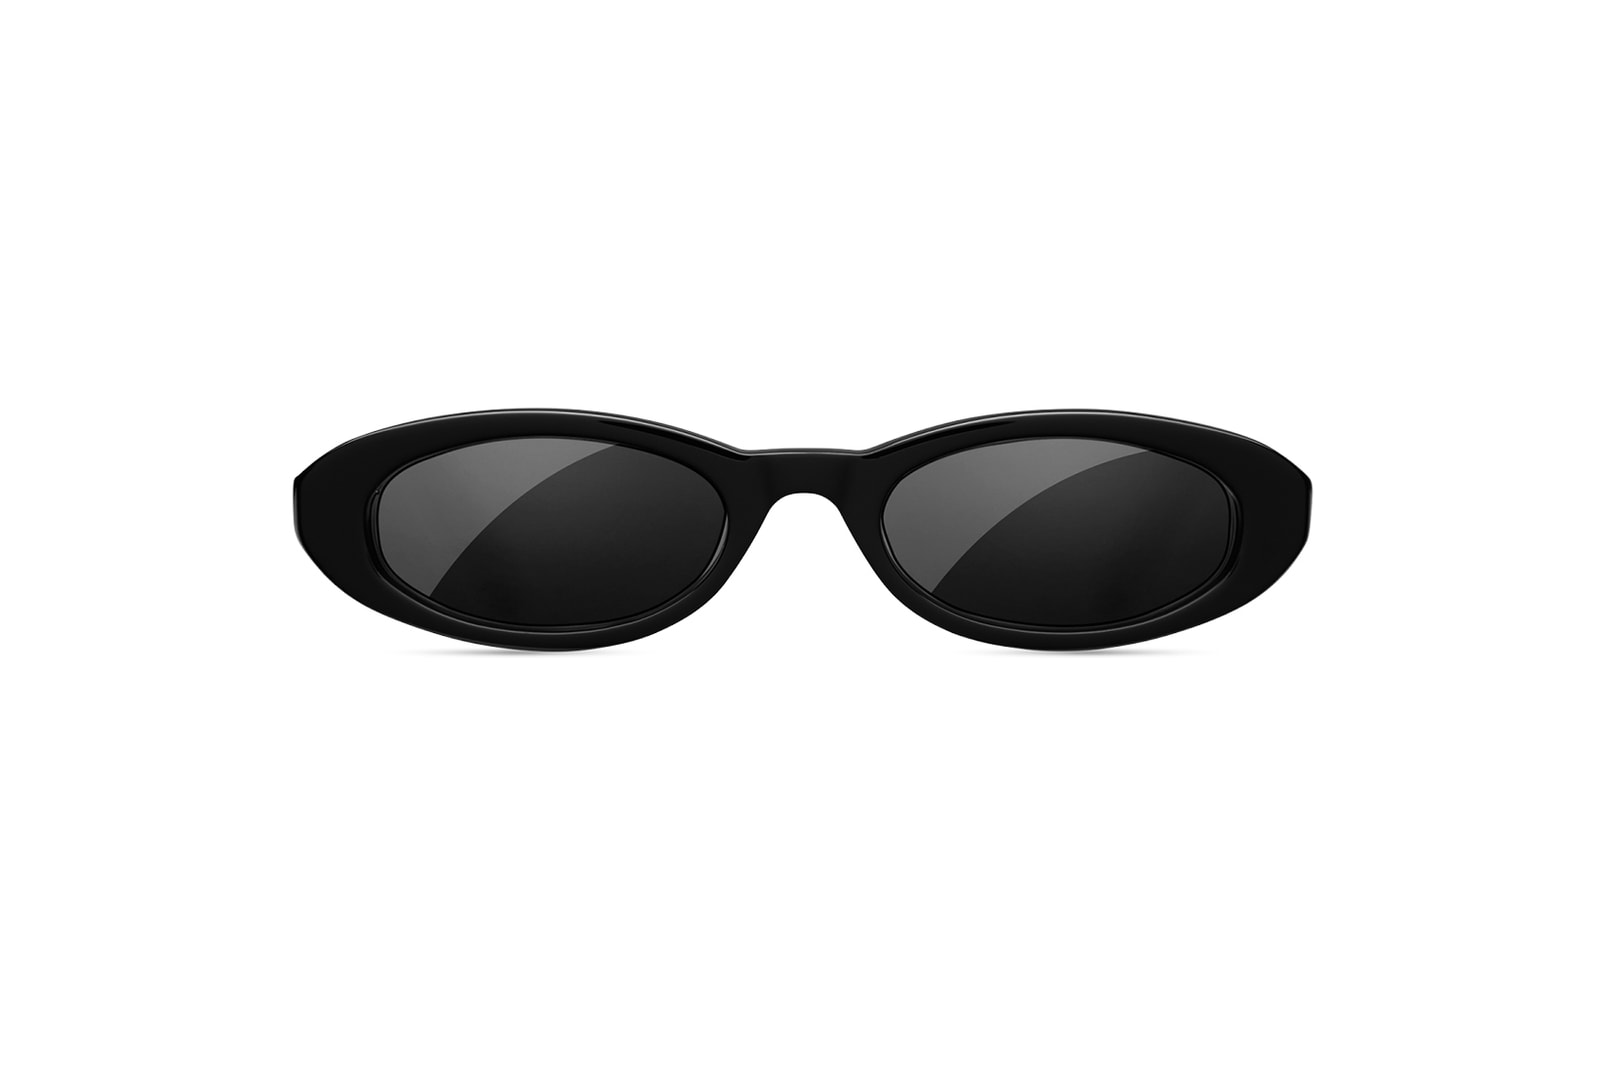 CHIMI eyewear round oval sunglasses brand mini small sci fi futuristic shades affordable stockholm label joel ighe pink white black unisex mens womens where to buy